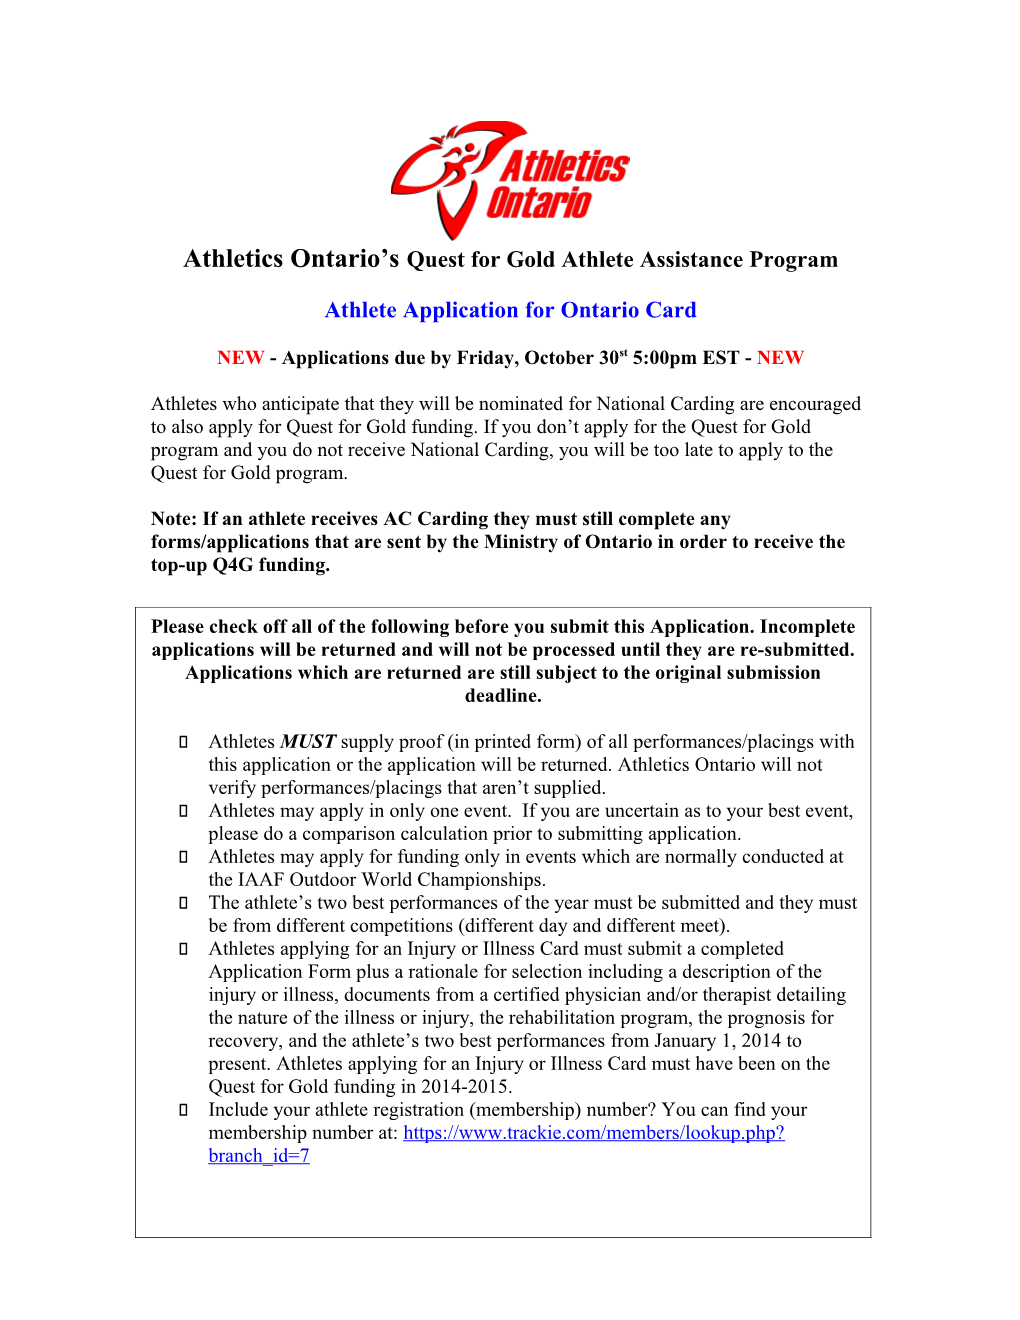 Quest for Gold Athlete Assitance Program